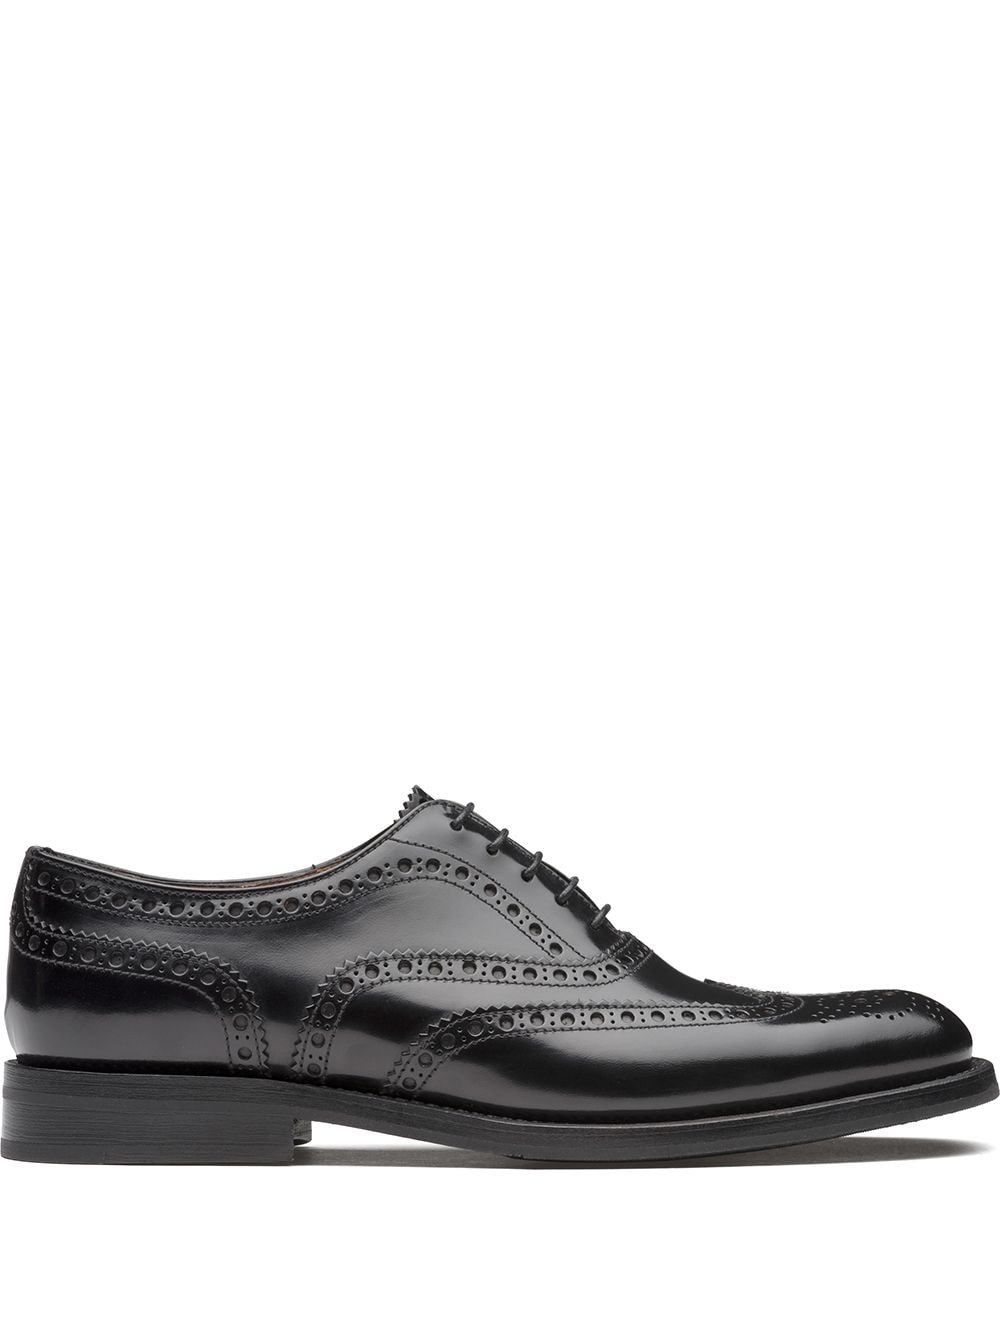 Burwood 7 W Oxford shoes